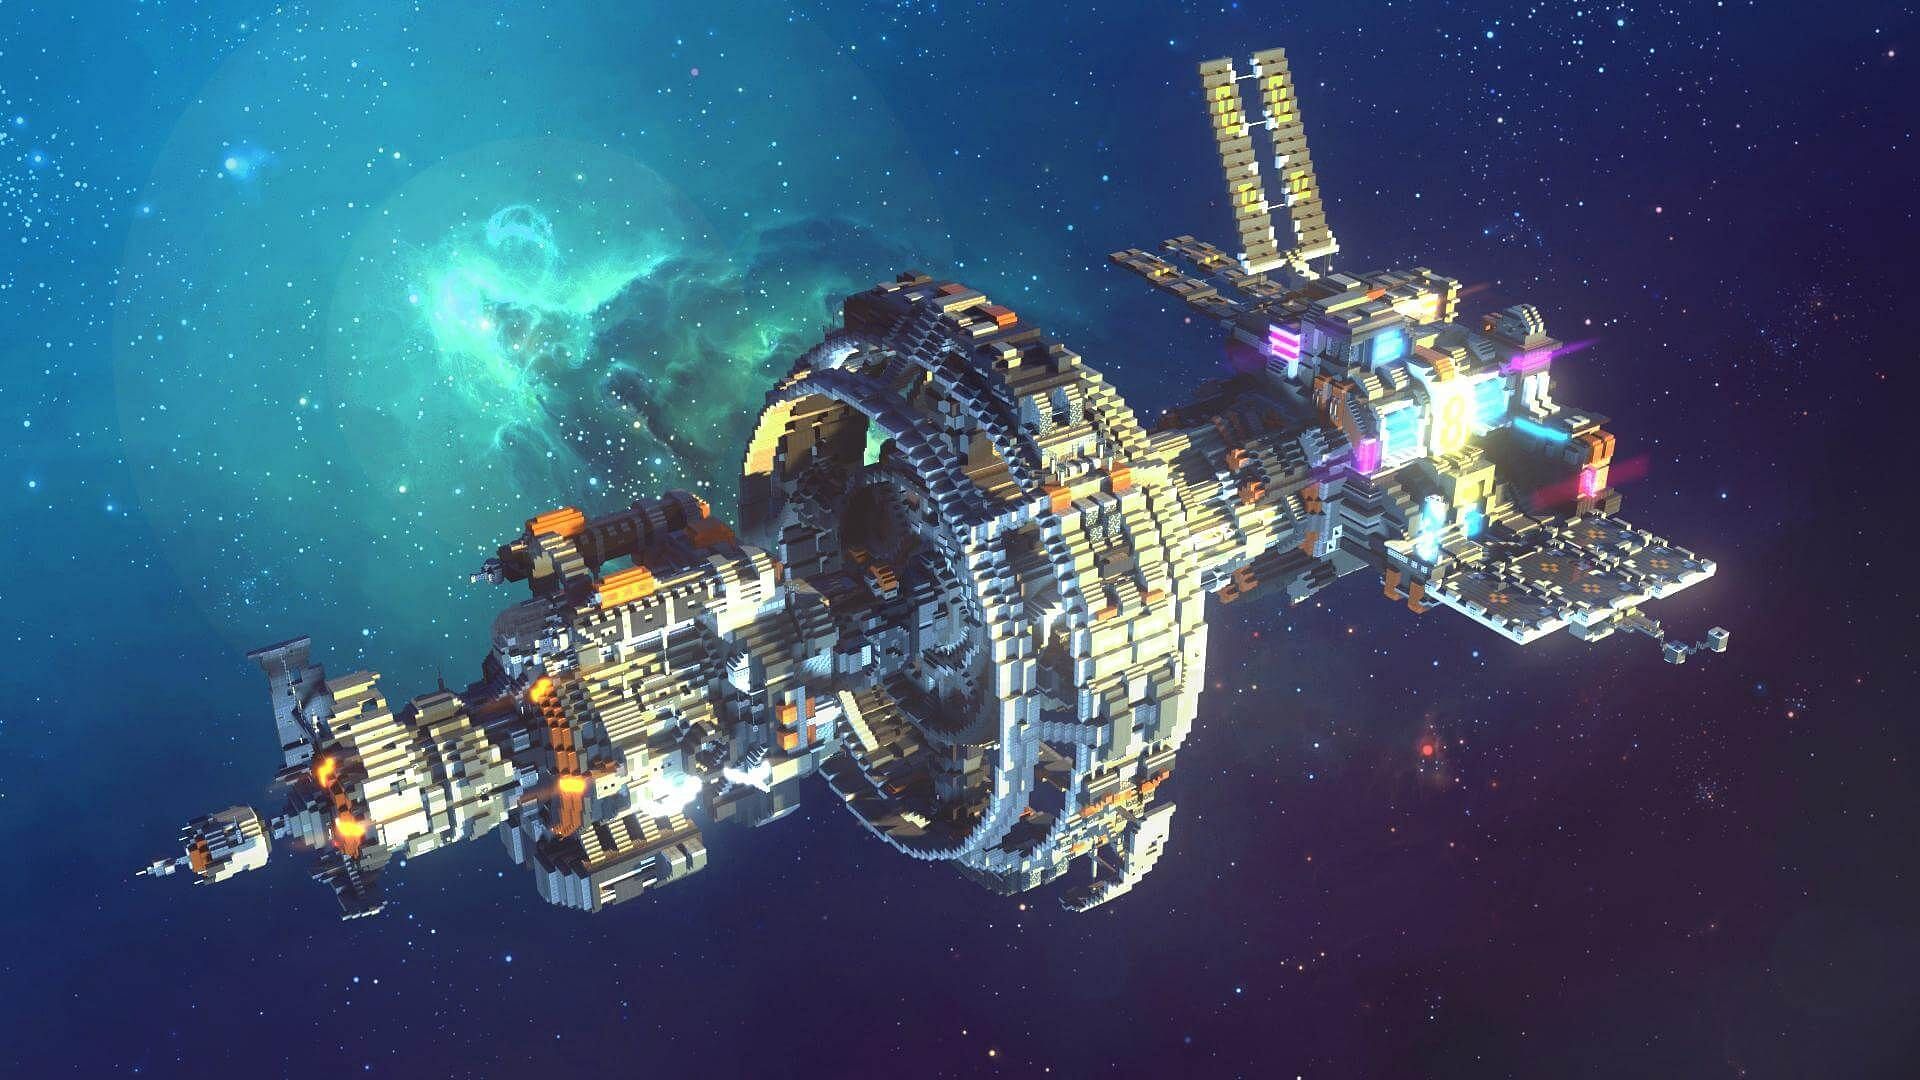 A space station in Vortex Network (Image via Vortexnetwork.net)